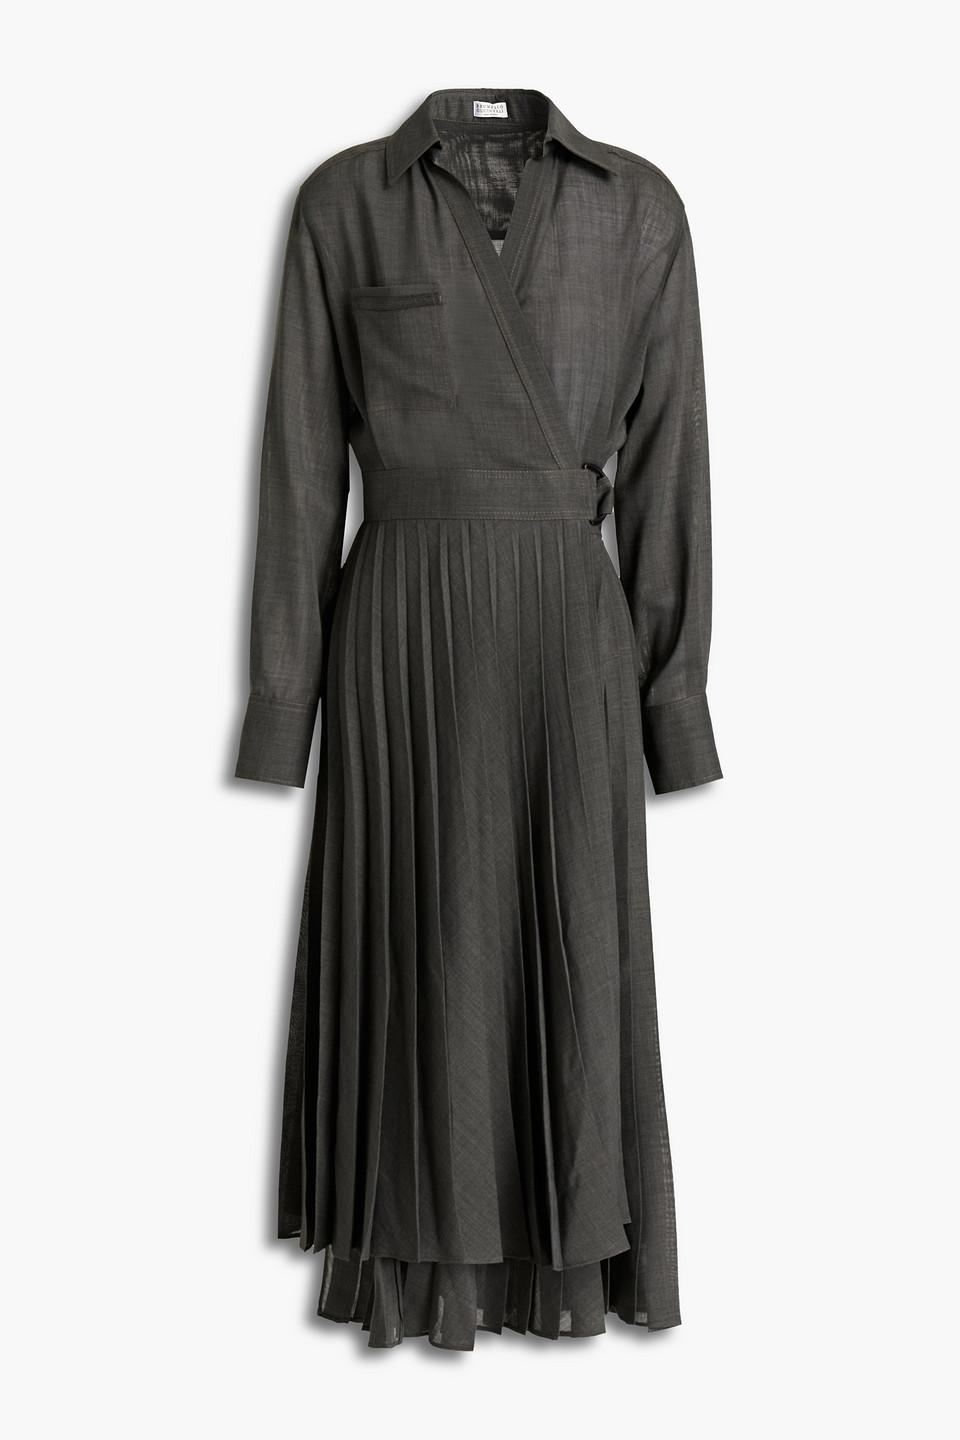 Brunello Cucinelli Bead-embellished Pleated Gauze Midi Wrap Dress in Gray |  Lyst